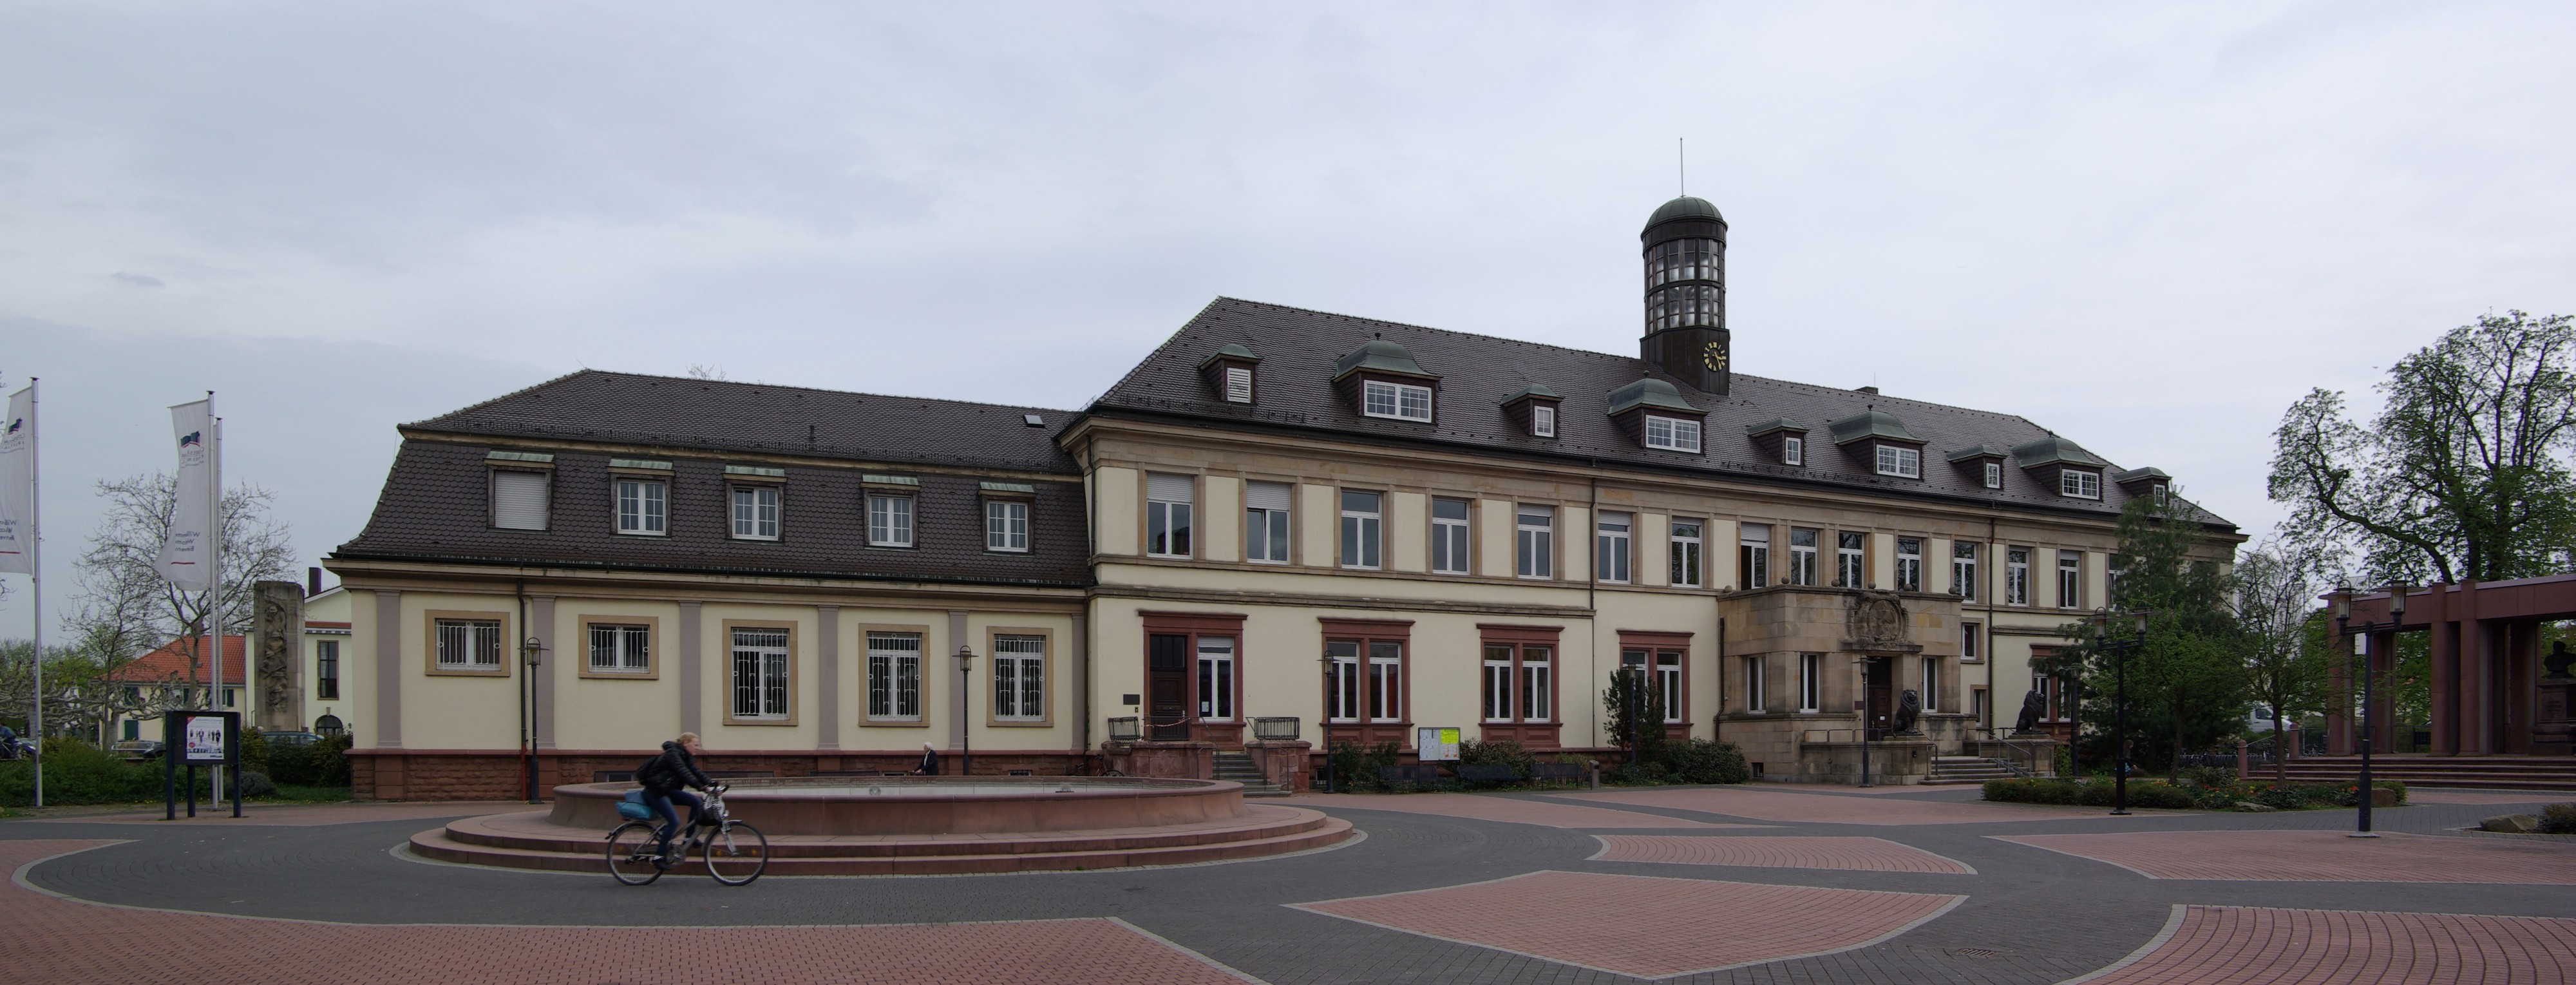 Frankenthal BW 9